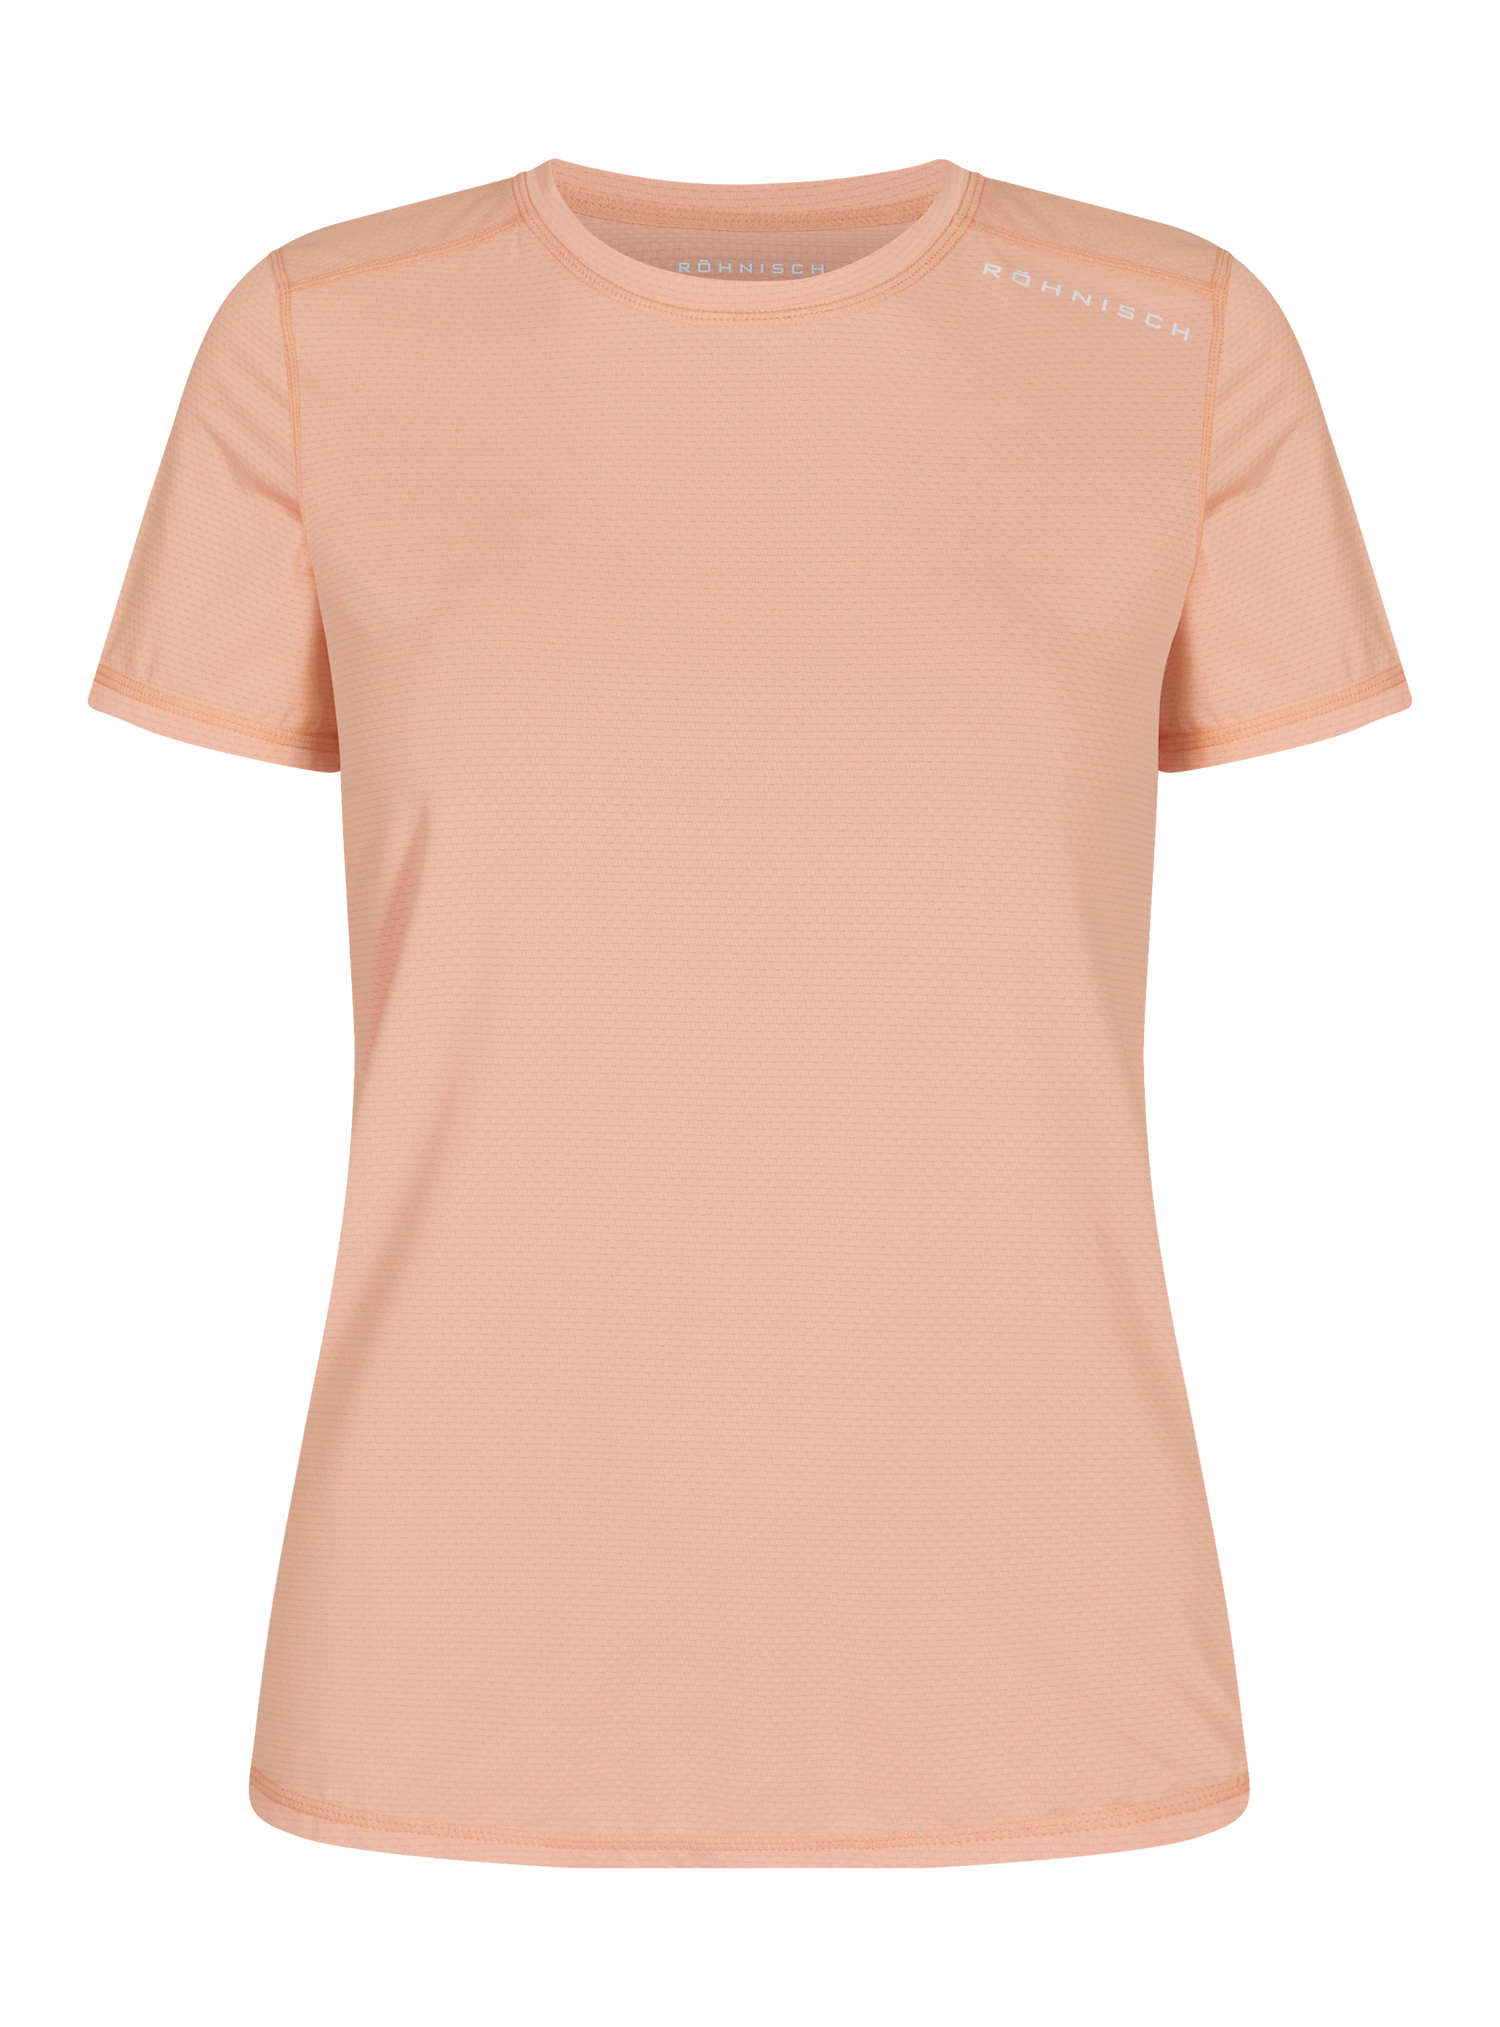 Röhnisch Jacquard Tee - Recycled polyester Prairie Sunset Shirt